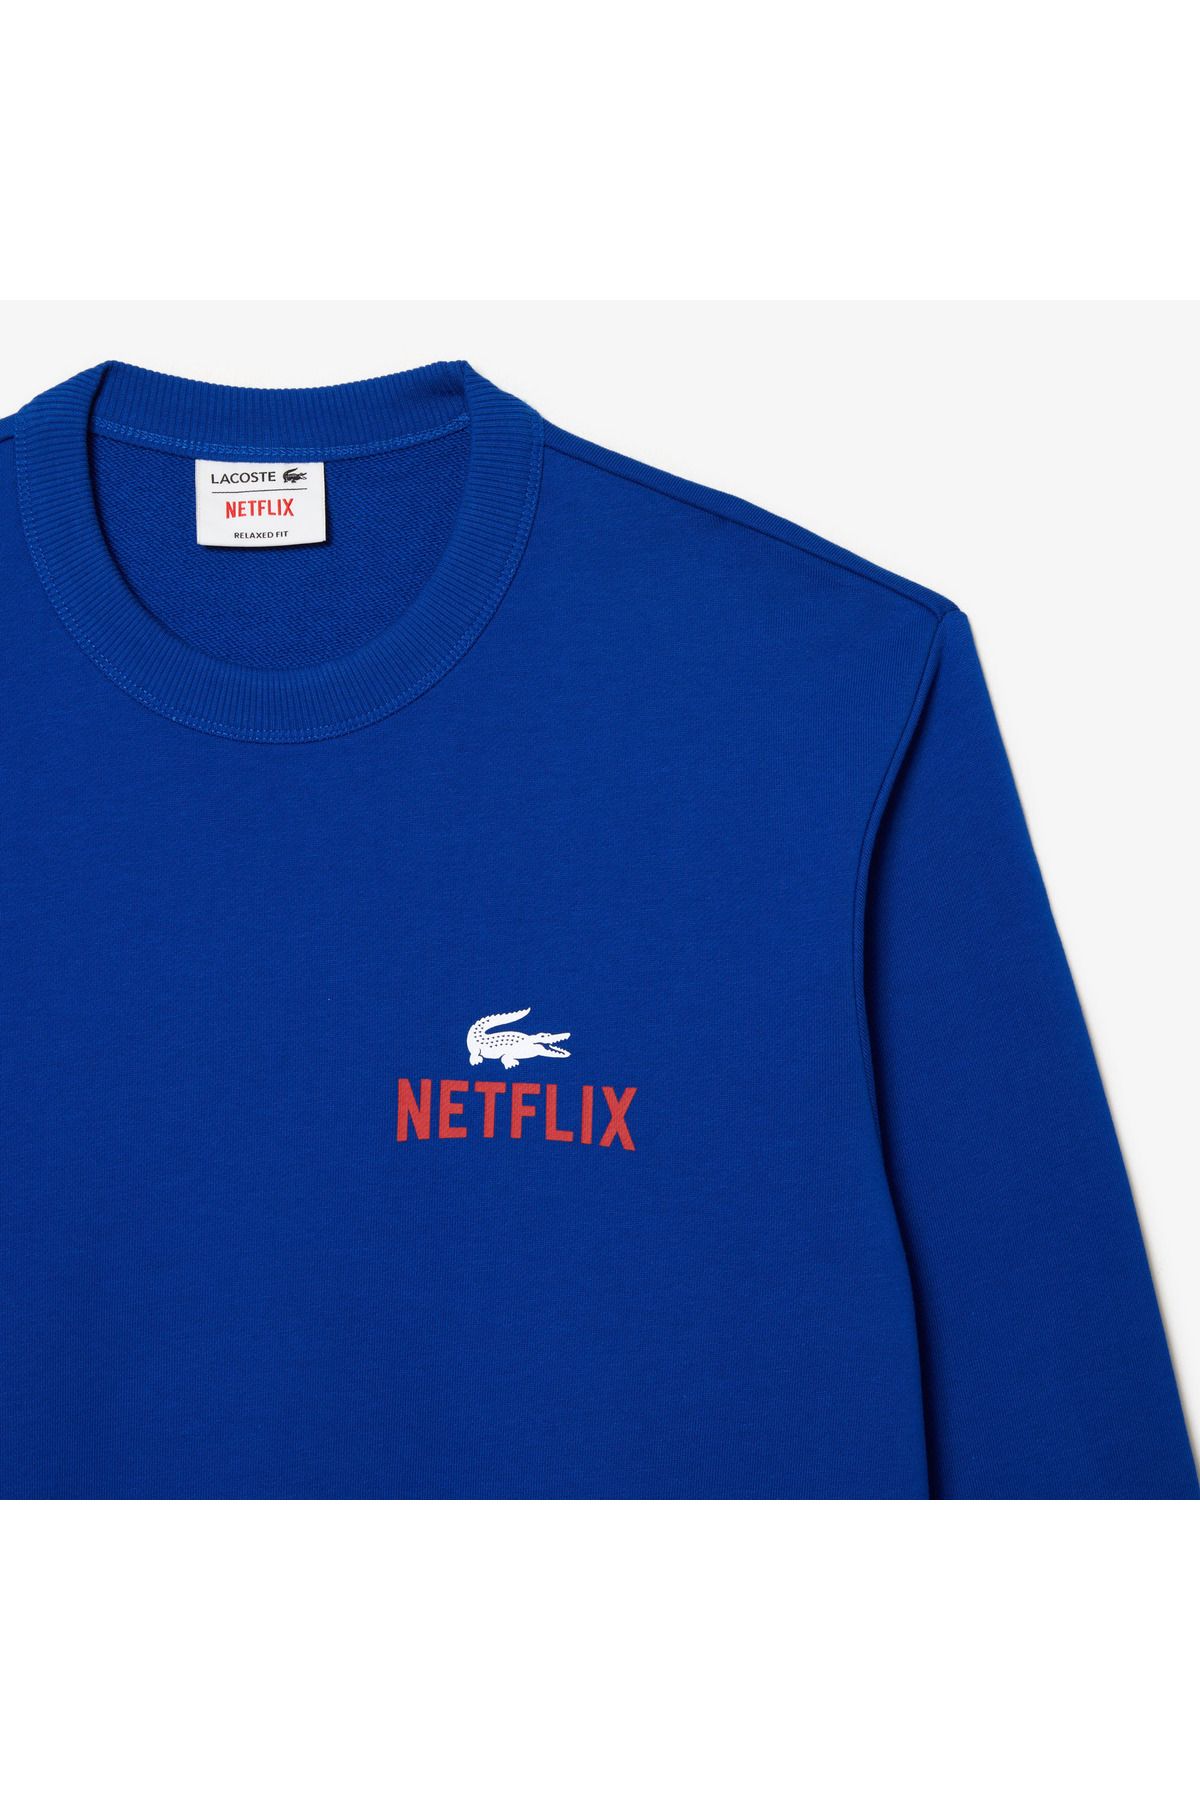 Lacoste X Netflix Unisex به طور منظم یقه دوچرخه چاپی پیراهن آبی چاپ شده